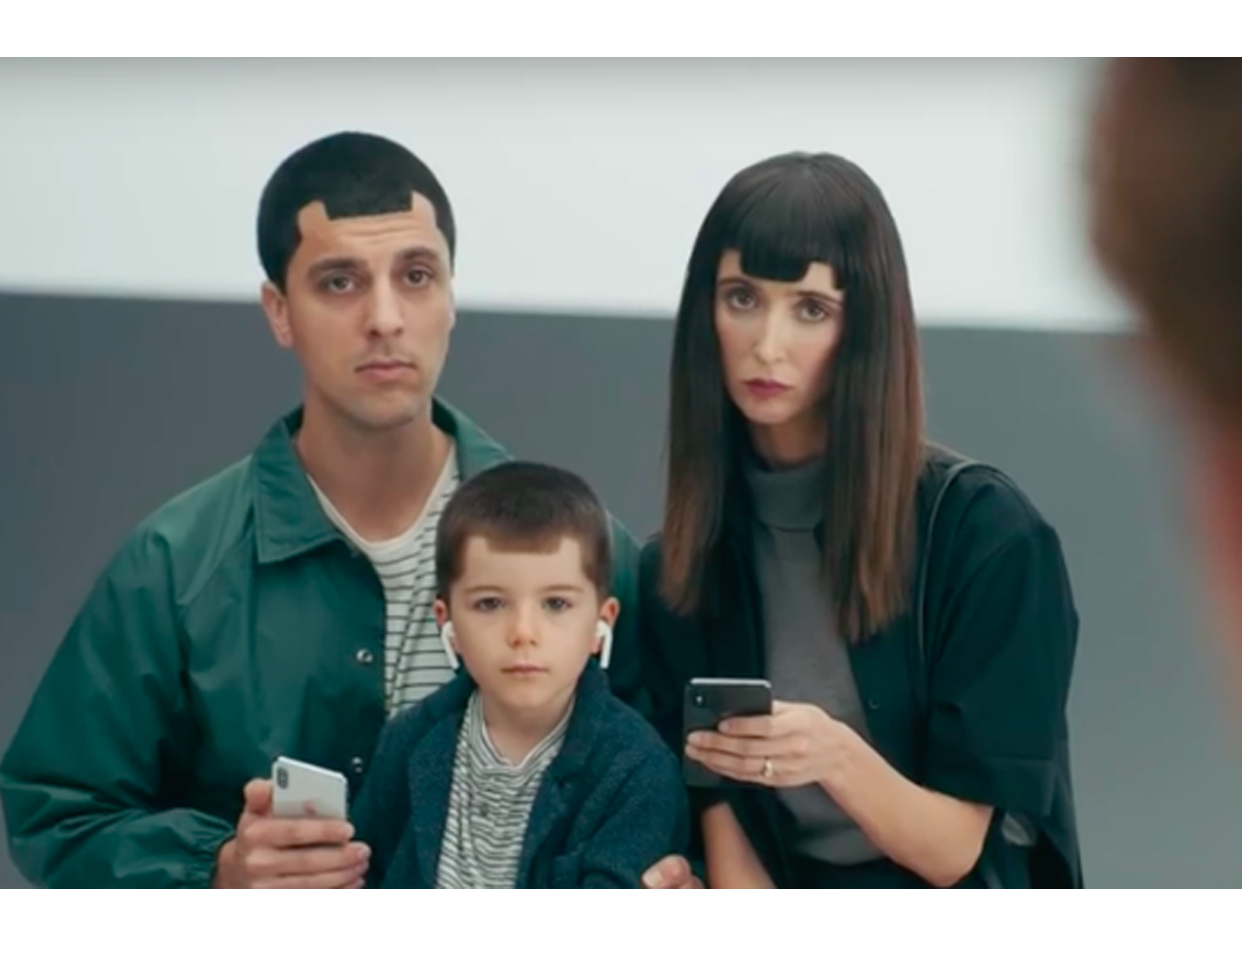 Mobile 三星狂推3支廣告diss 蘋果 諷刺 Iphone X的瀏海螢幕 網友笑 想炒話題